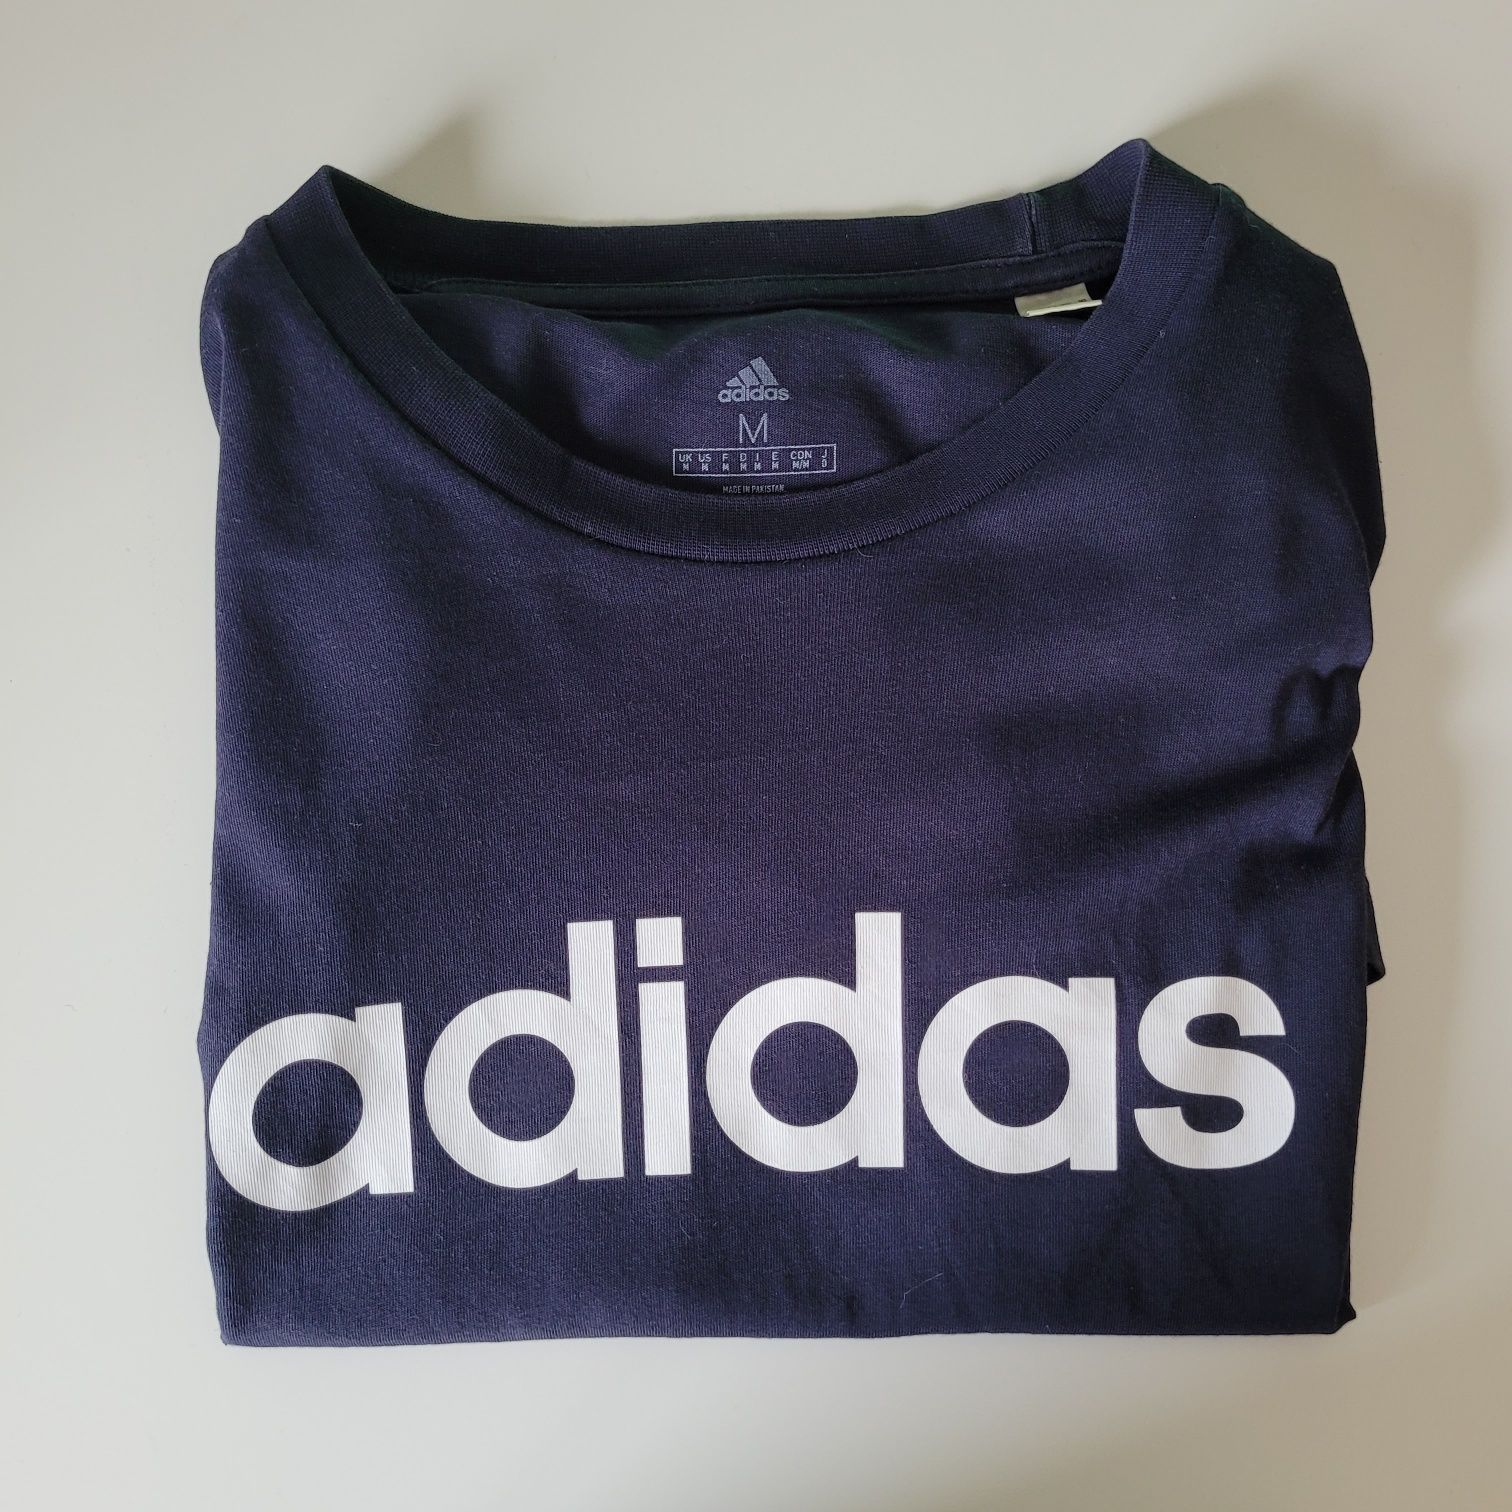 T-shirt Adidas - Tamanho M / Size M